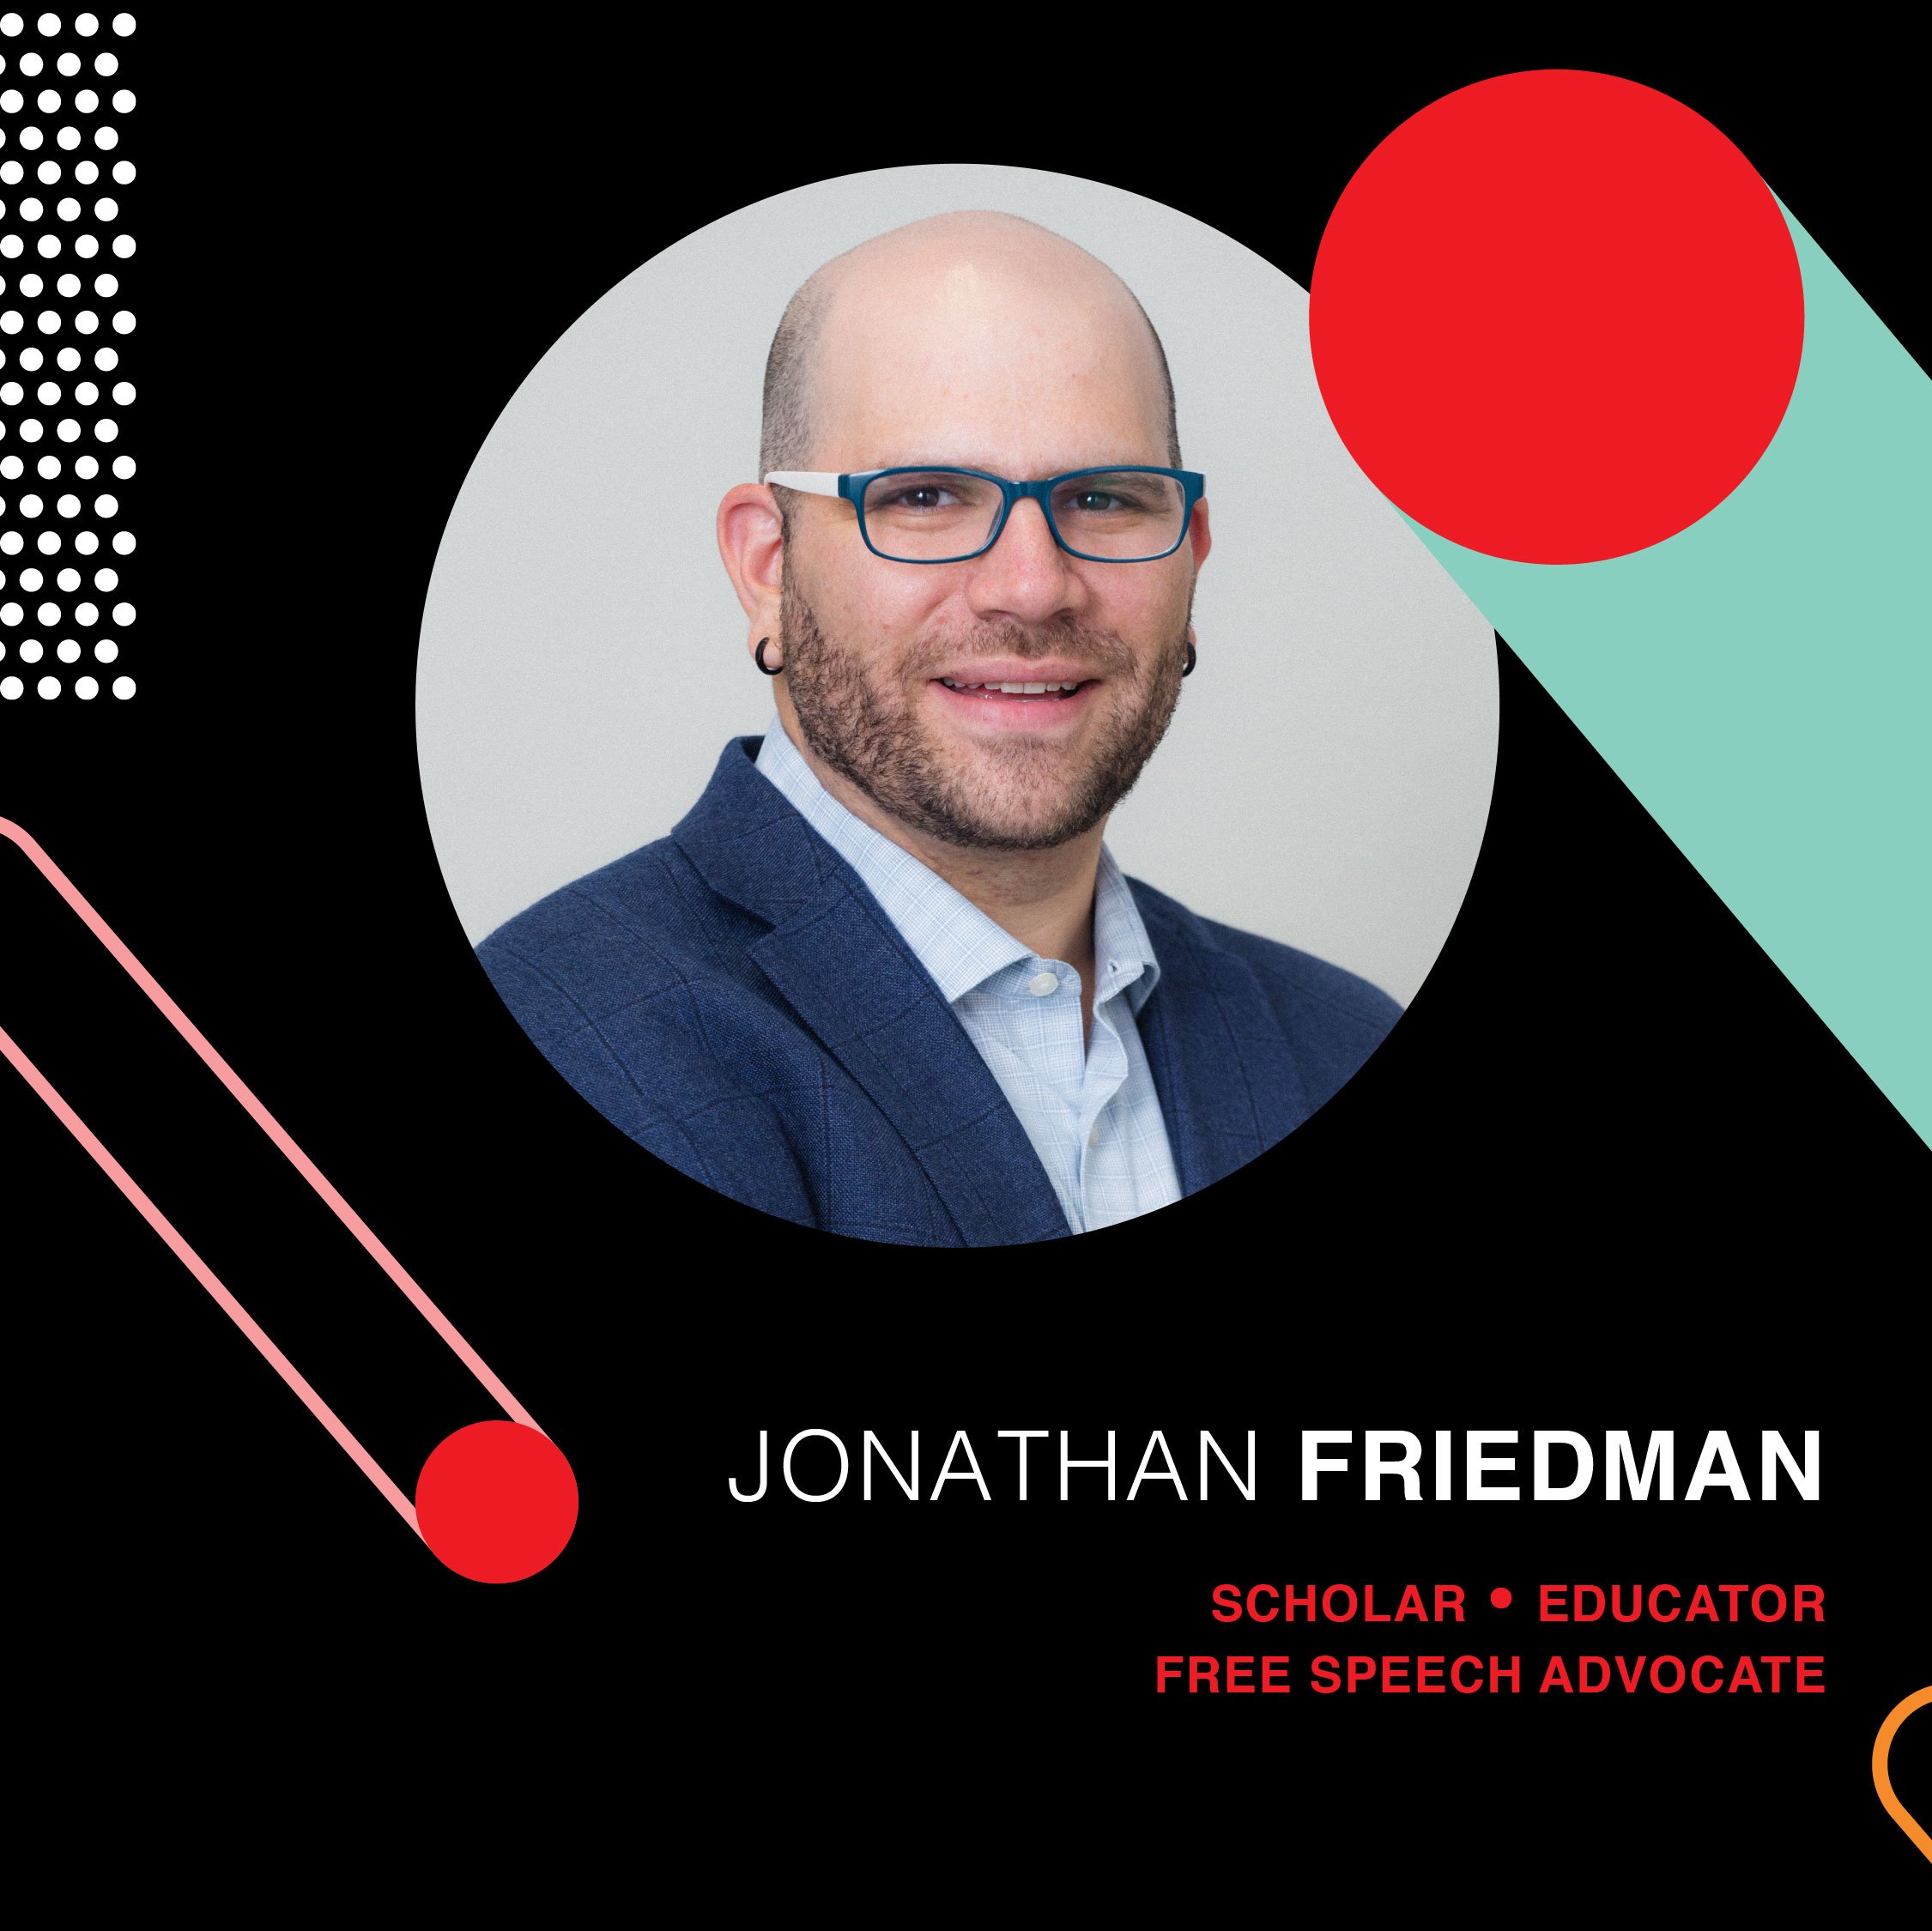 Jonathan Friedman